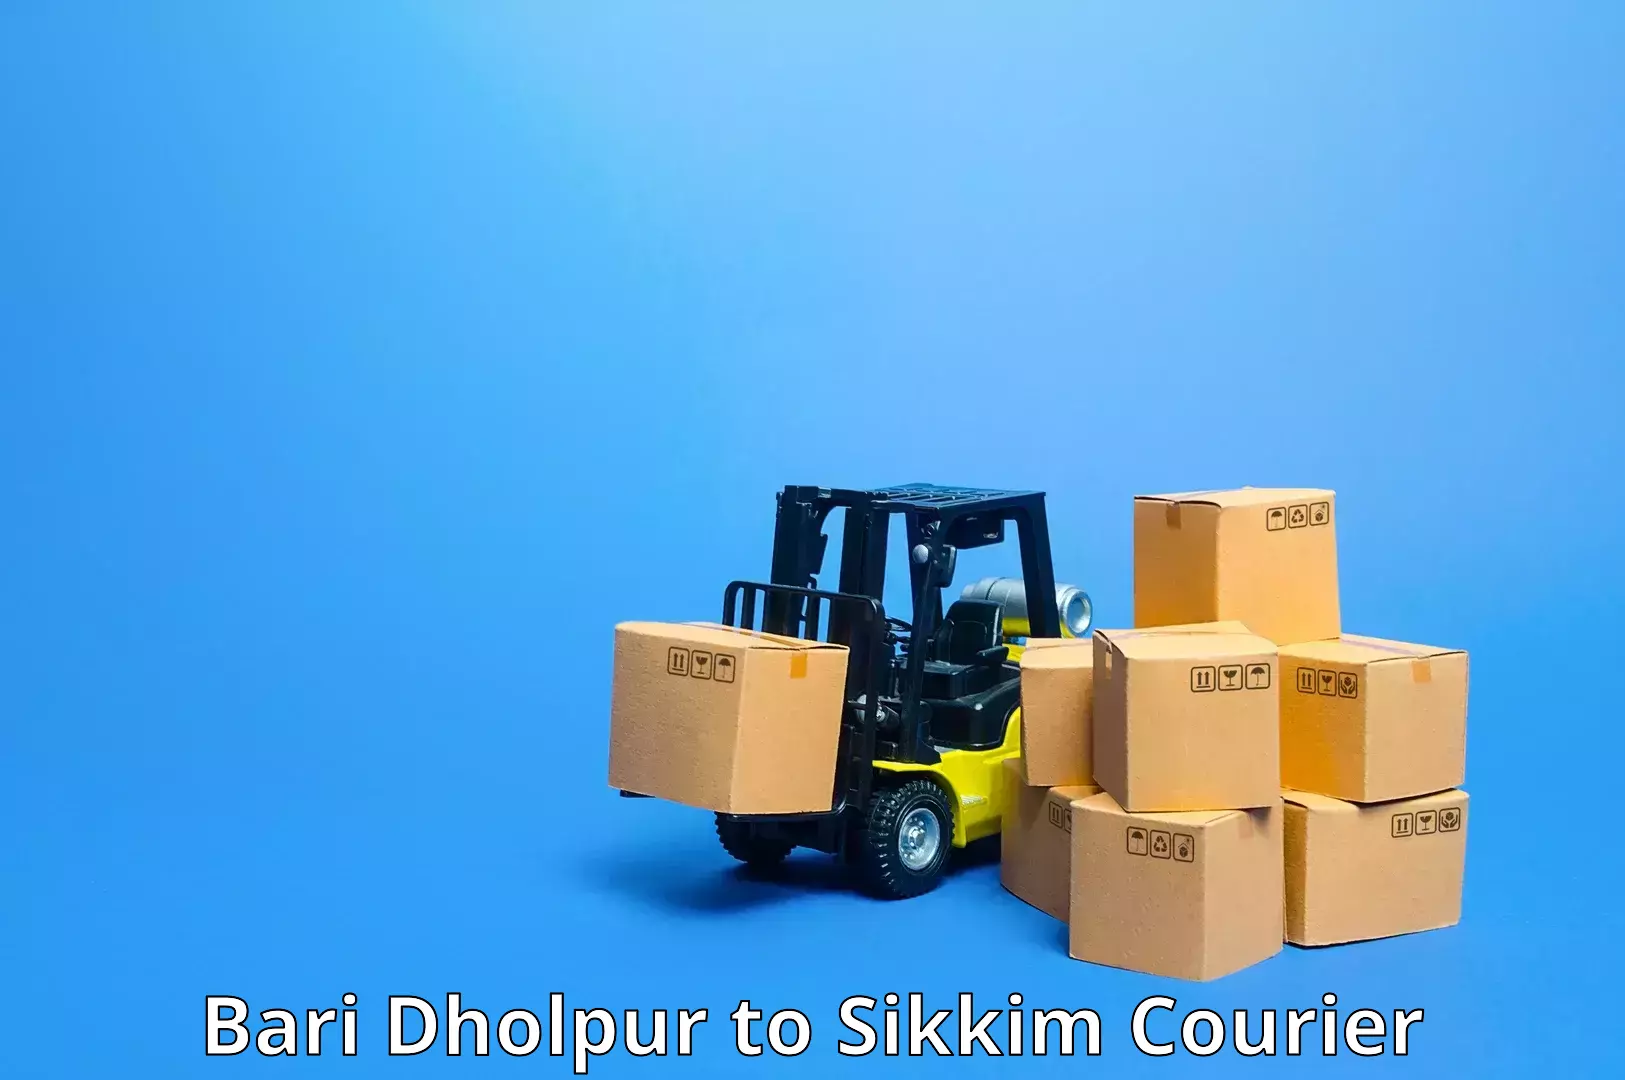 Tech-enabled shipping Bari Dholpur to Gangtok